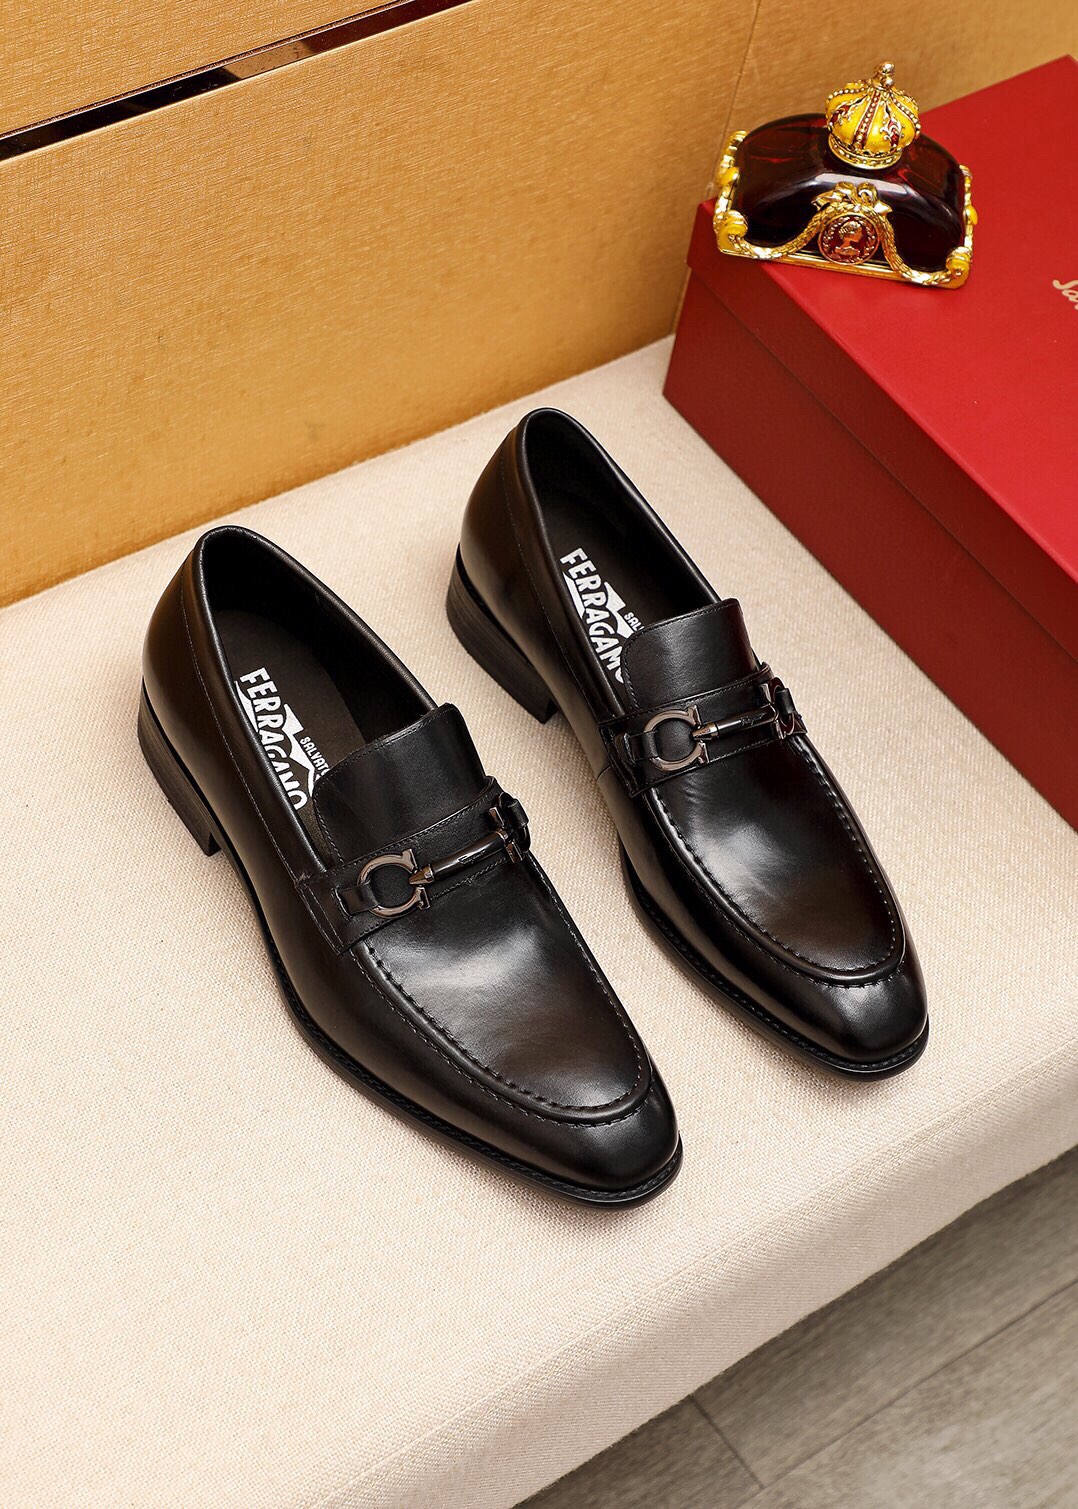 Product: Ferragamoo "Ferragamo" business leather shoes, regular size 38-44 (customized at 